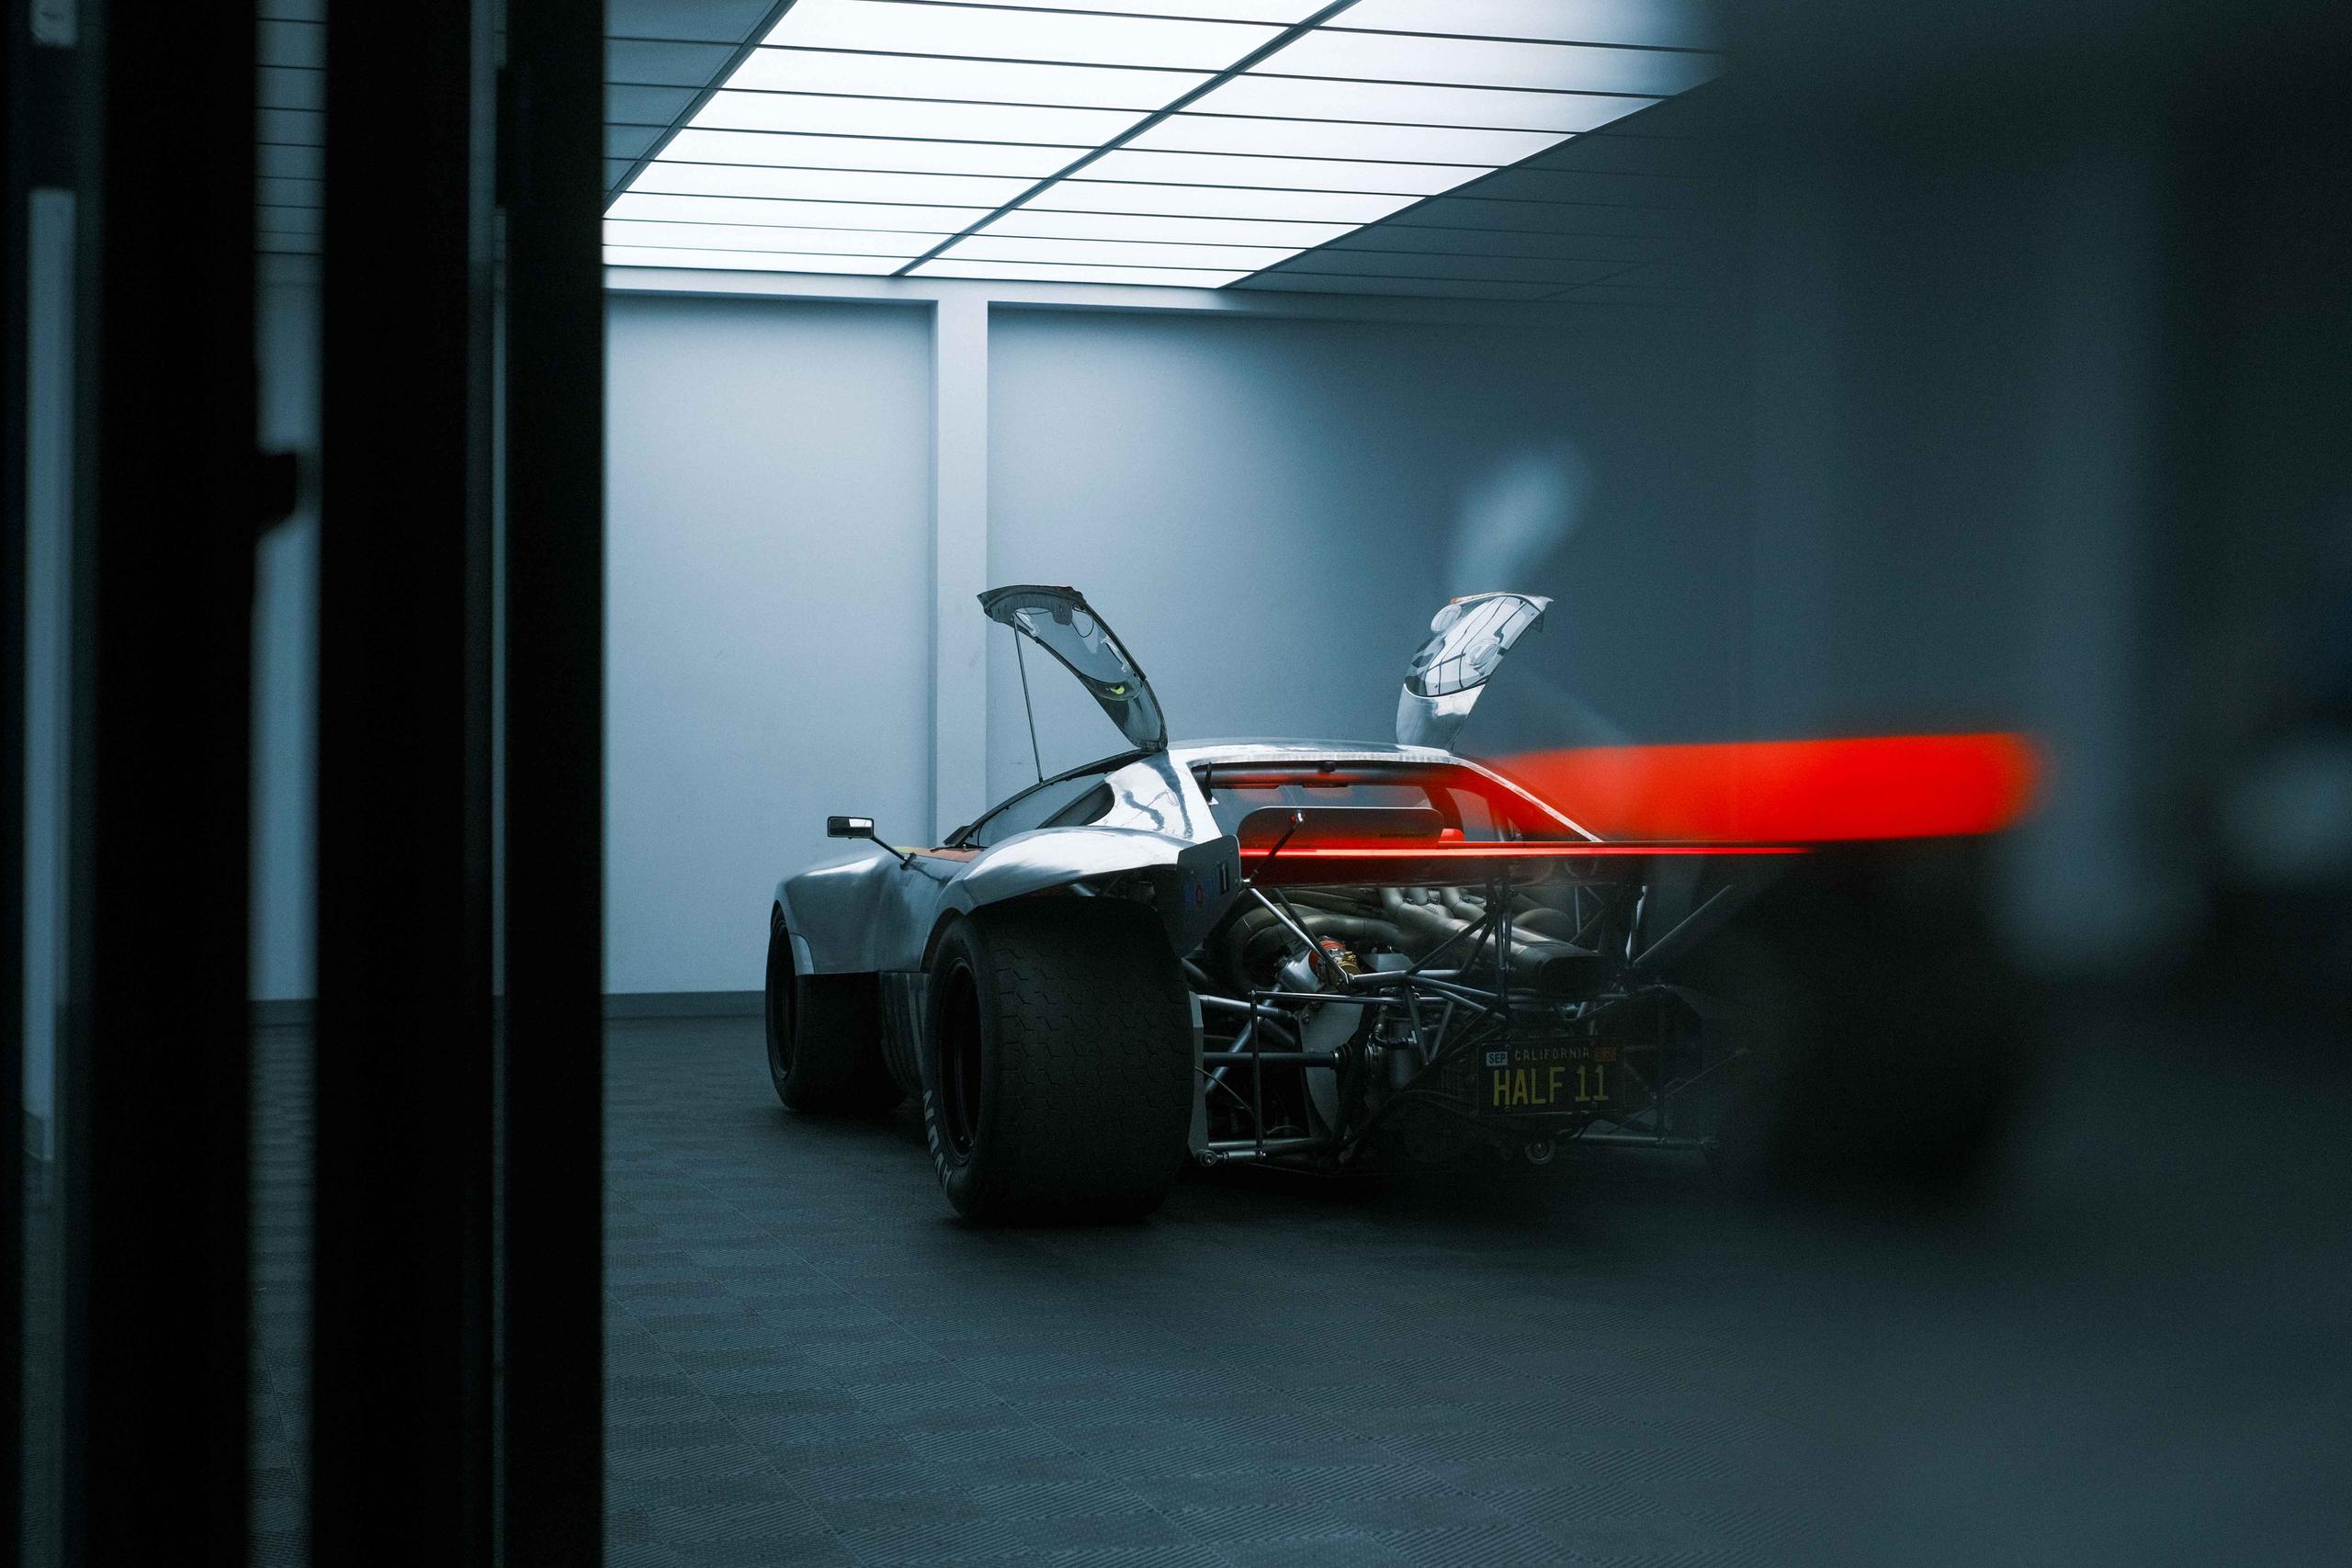 Oilstainlab's Half11 prototype race car in modern interior room